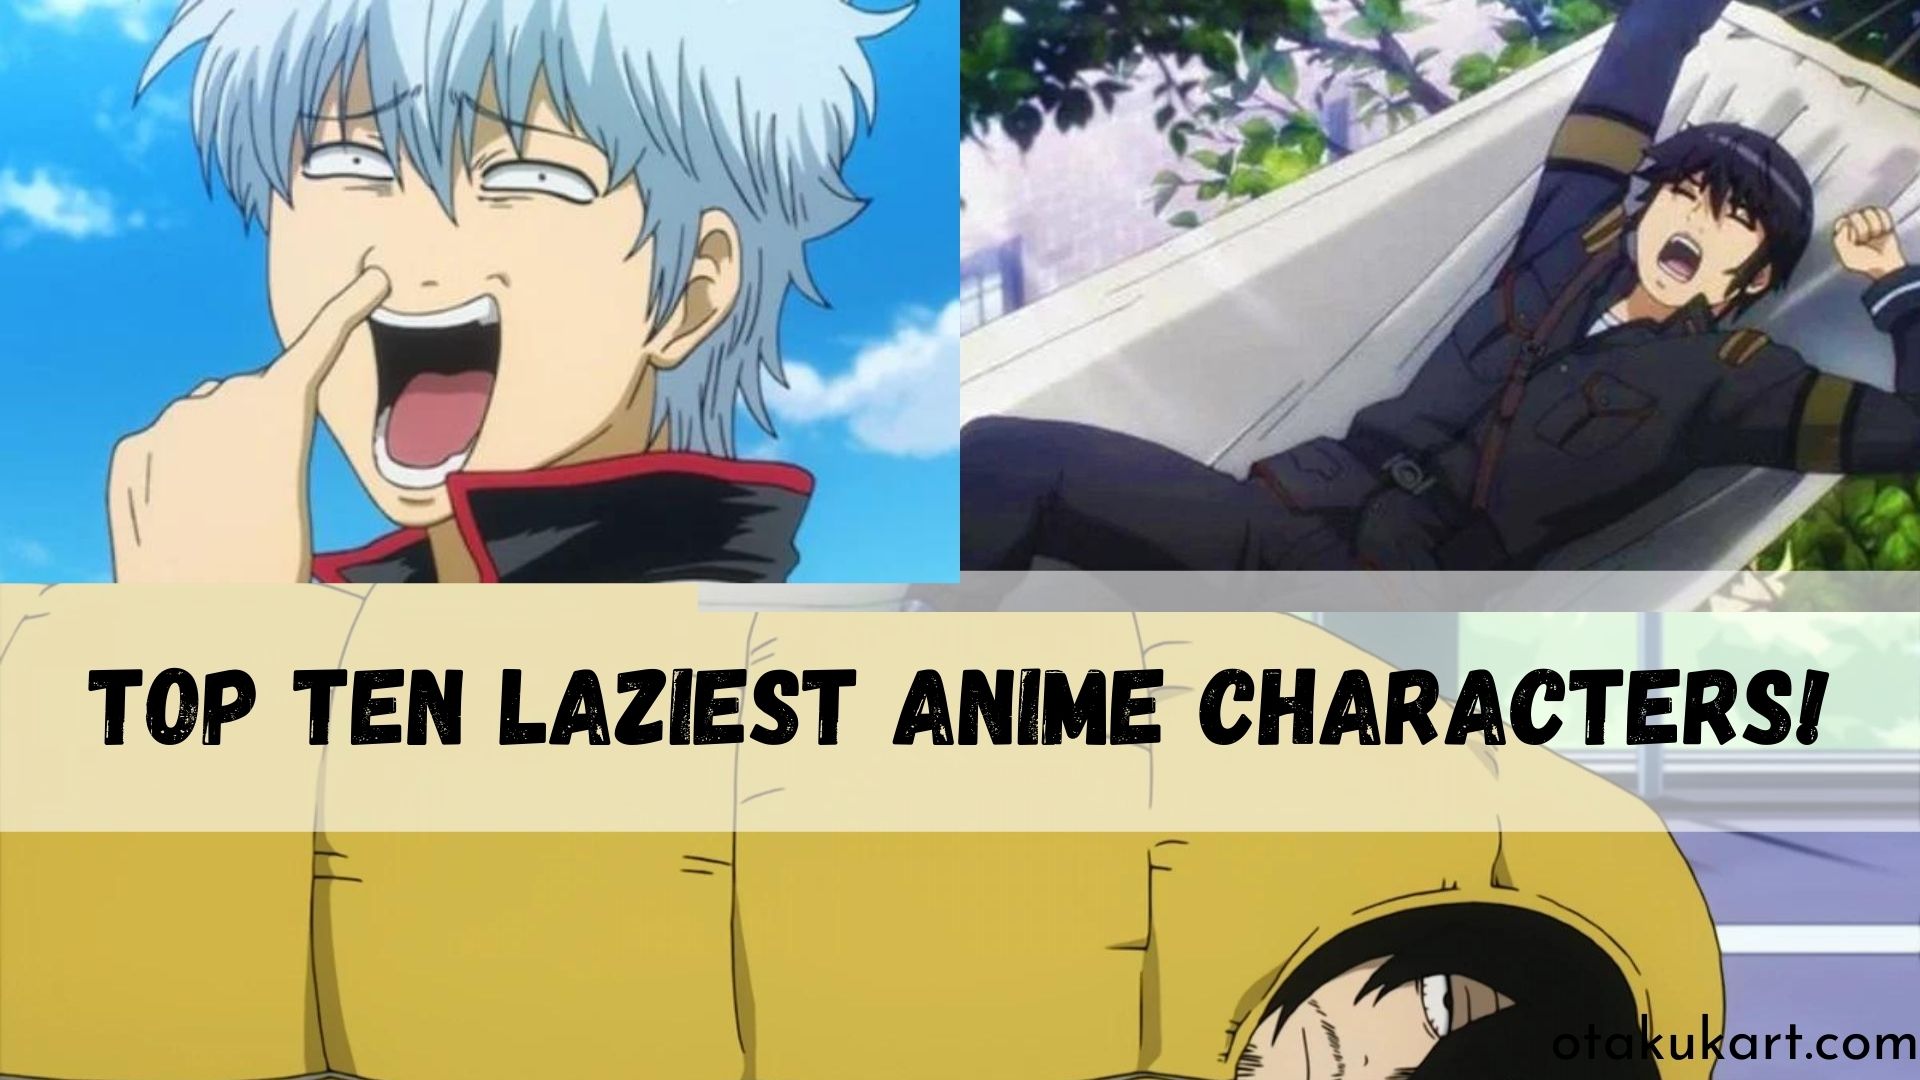 Top Ten Laziest Anime Characters!